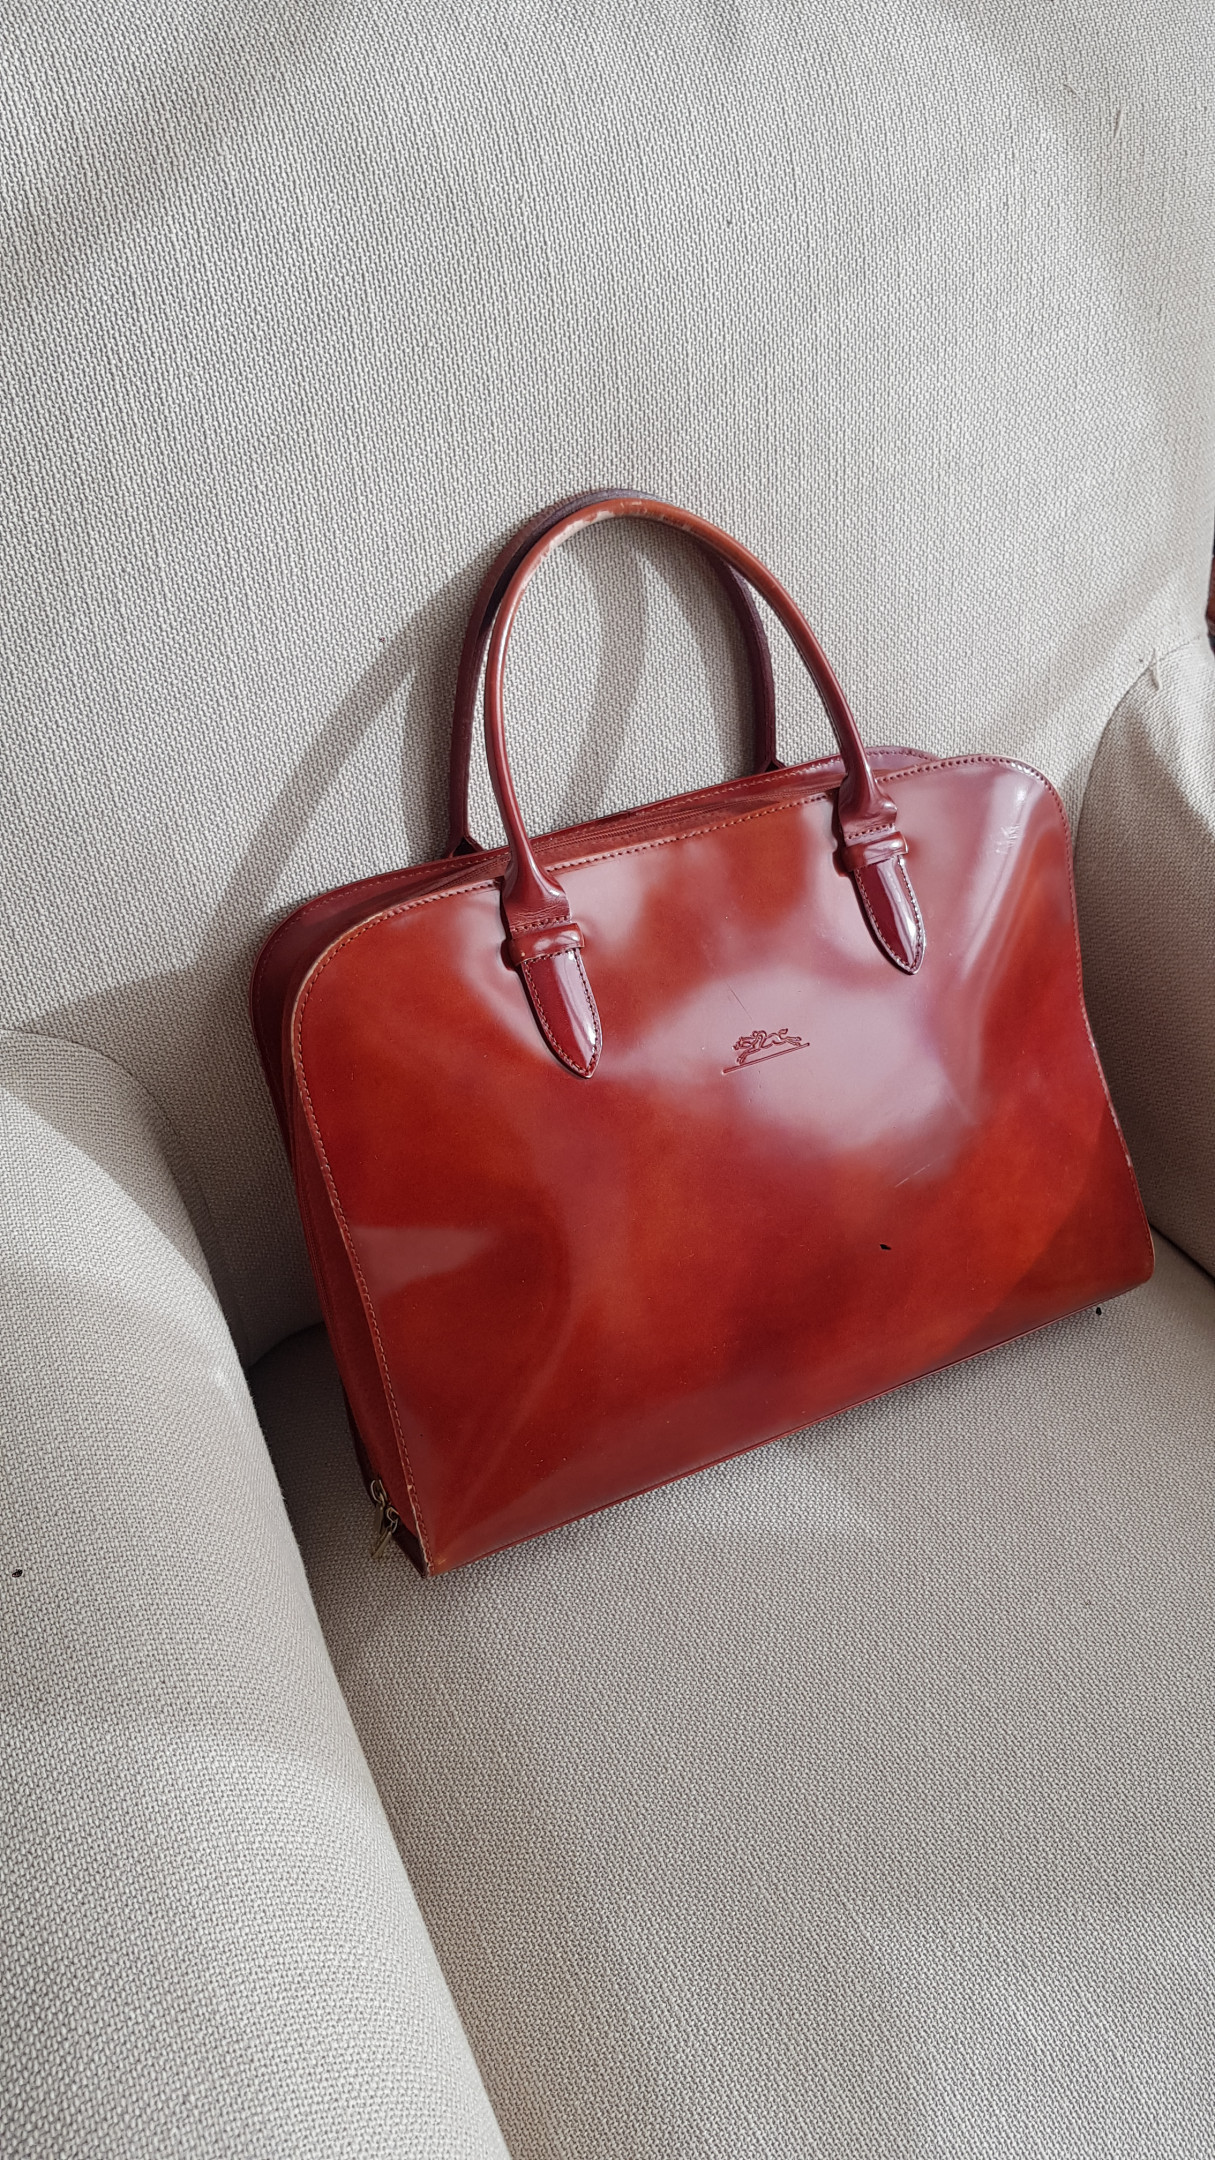 Vintage patent leather satchel / handbag LONGCHAMP